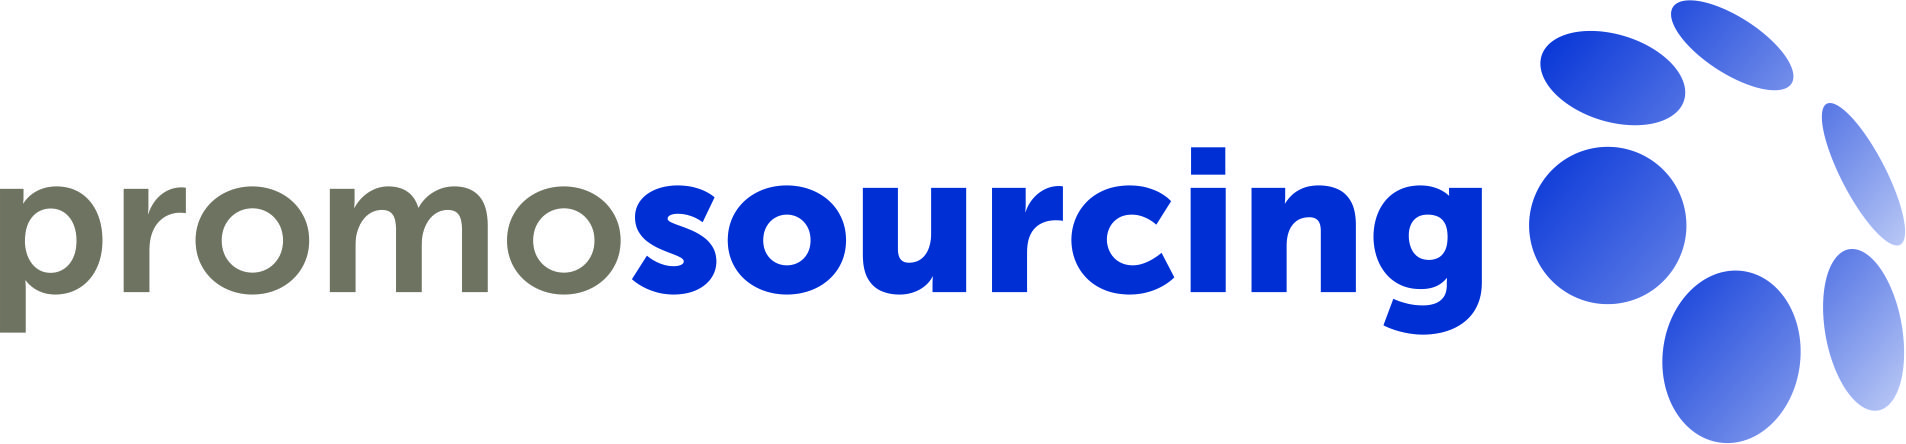 Promosourcing logo